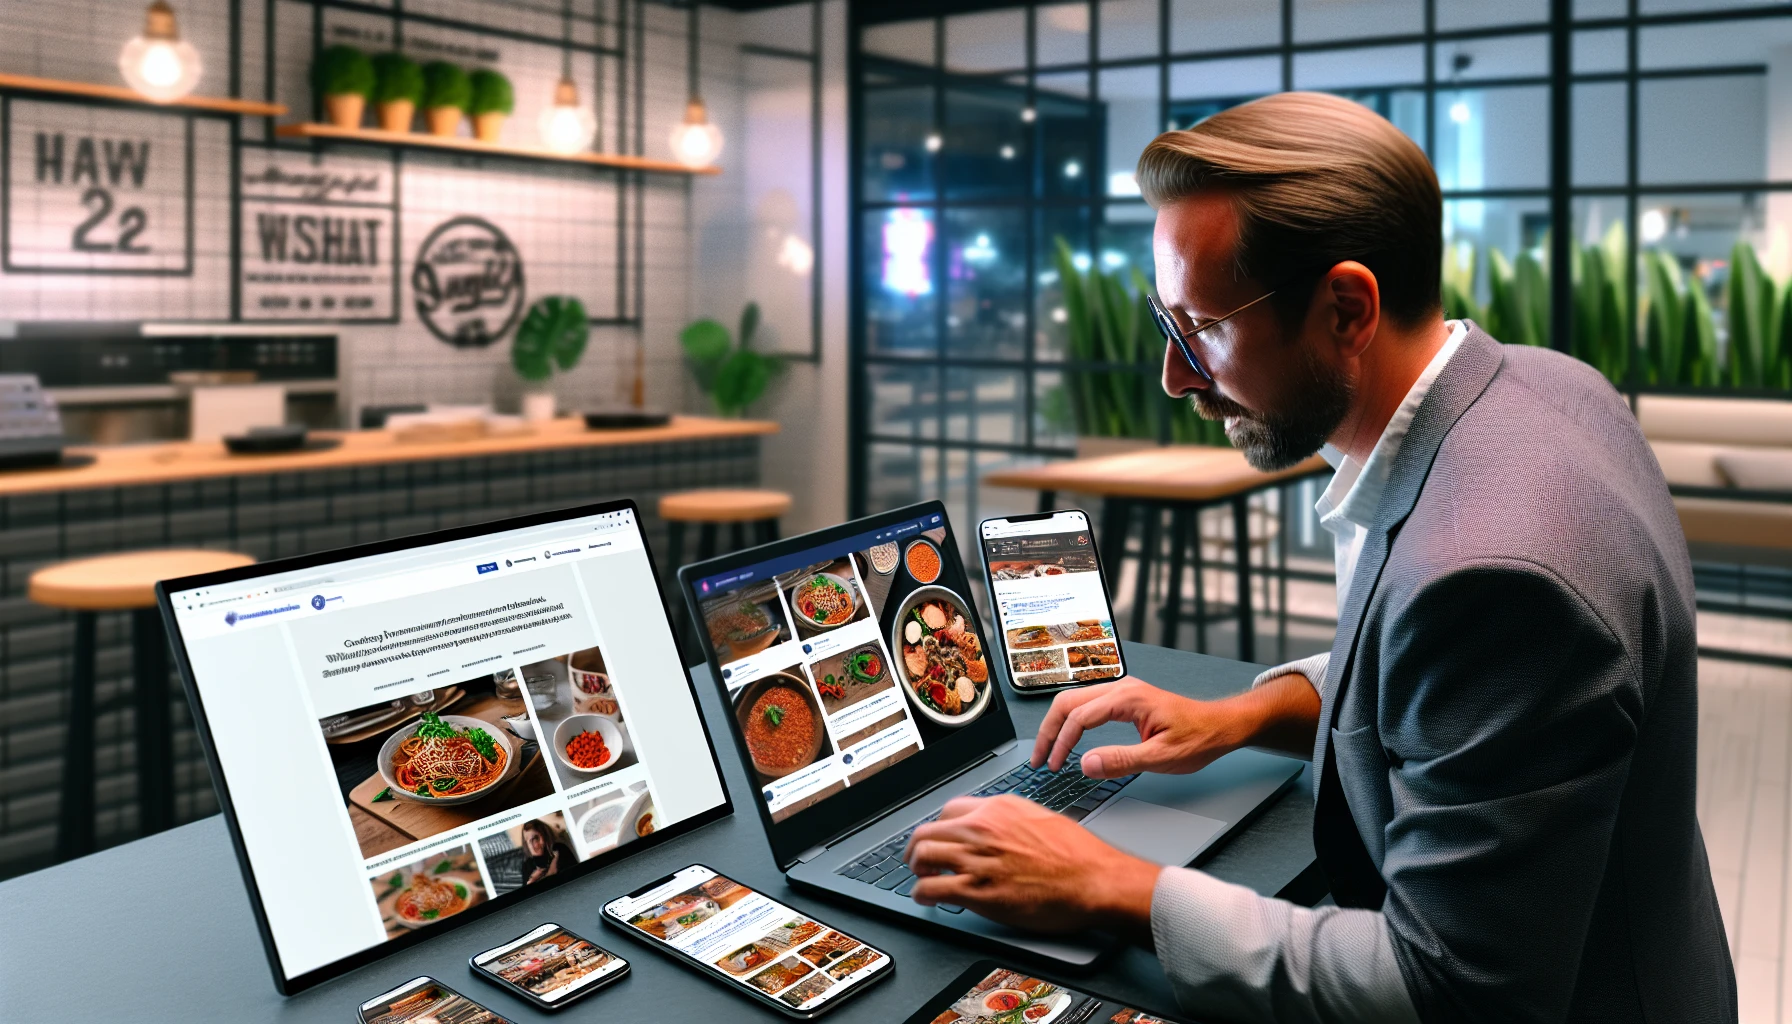 Restaurant website builders and social media management